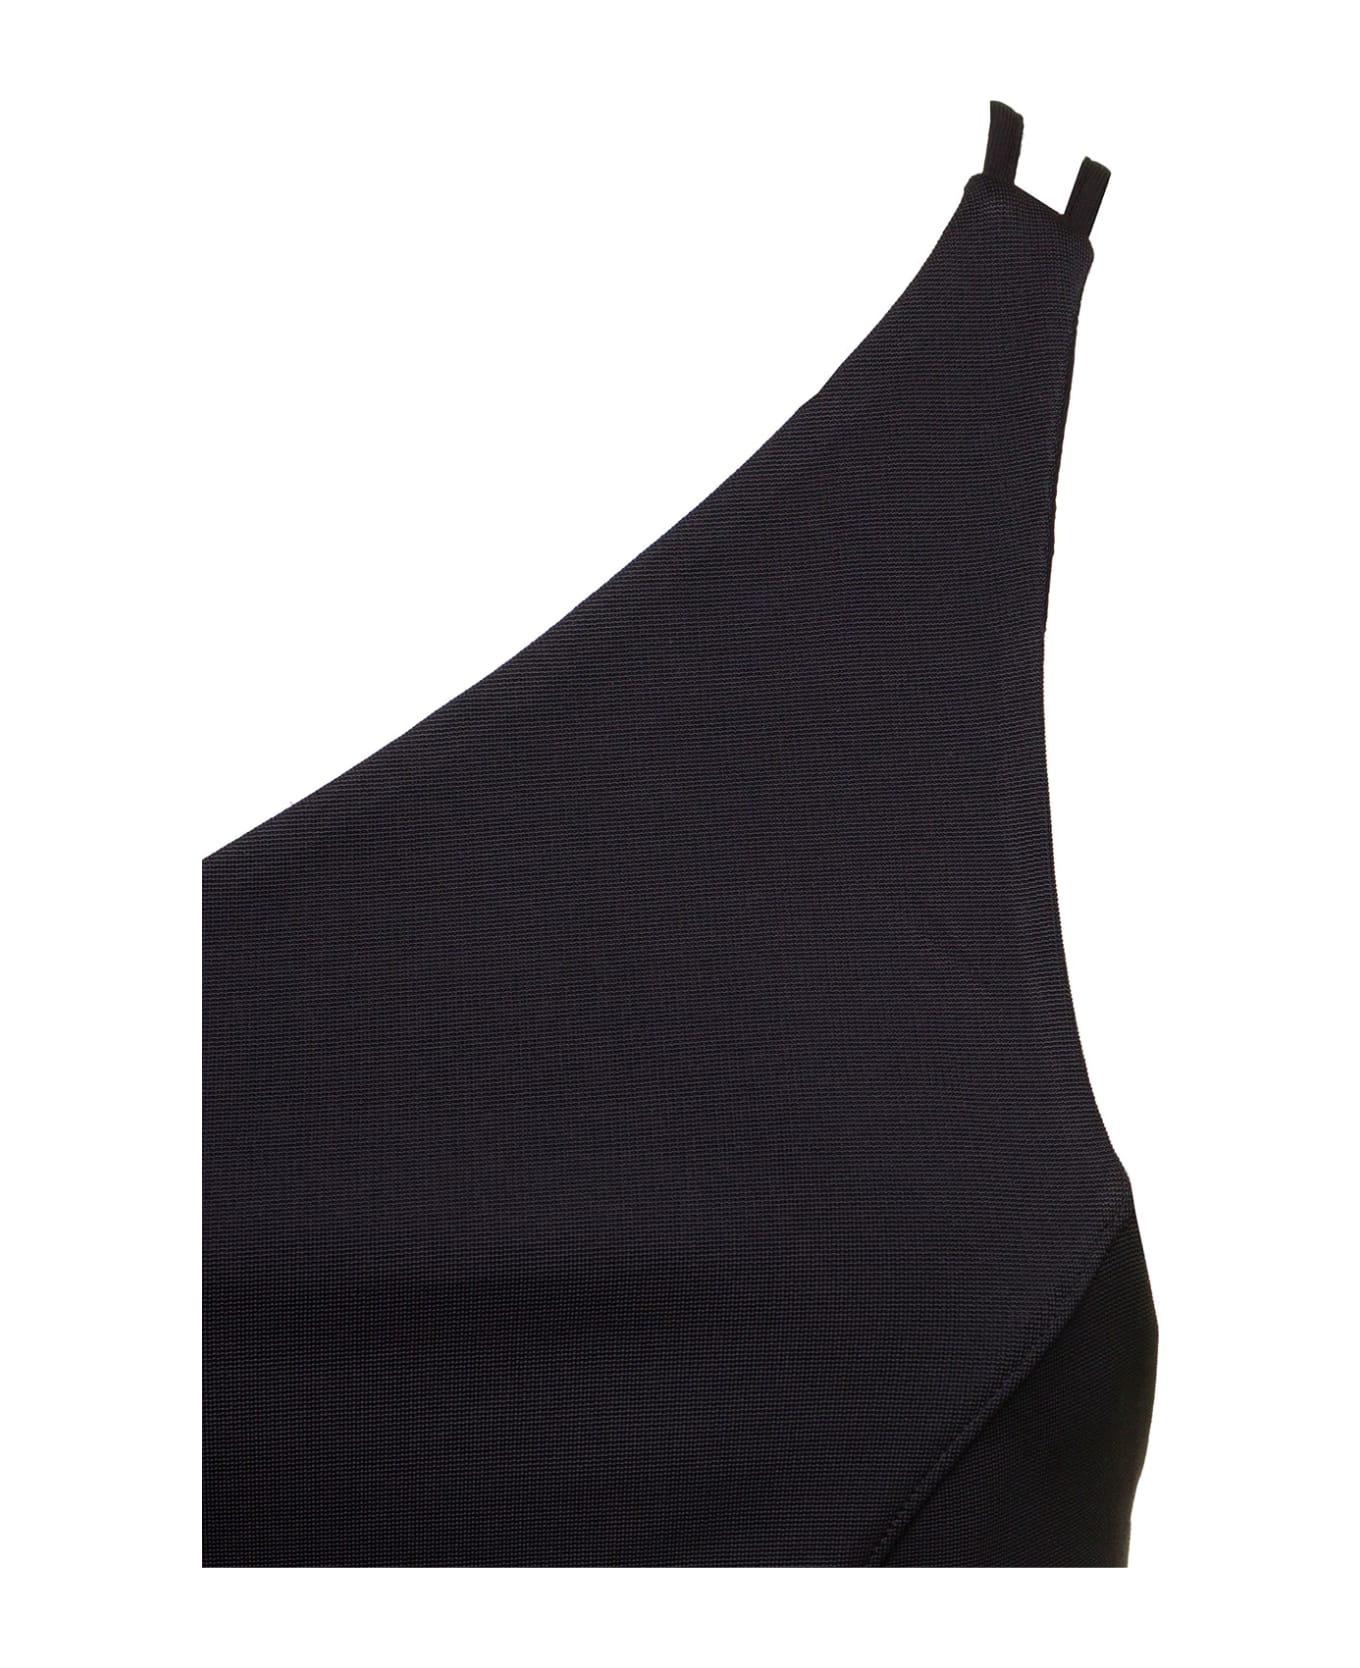 GAUGE81 'colorado' One Shoulder Mini Black Dress In Viscose Blend Woman Gauge81 - Black